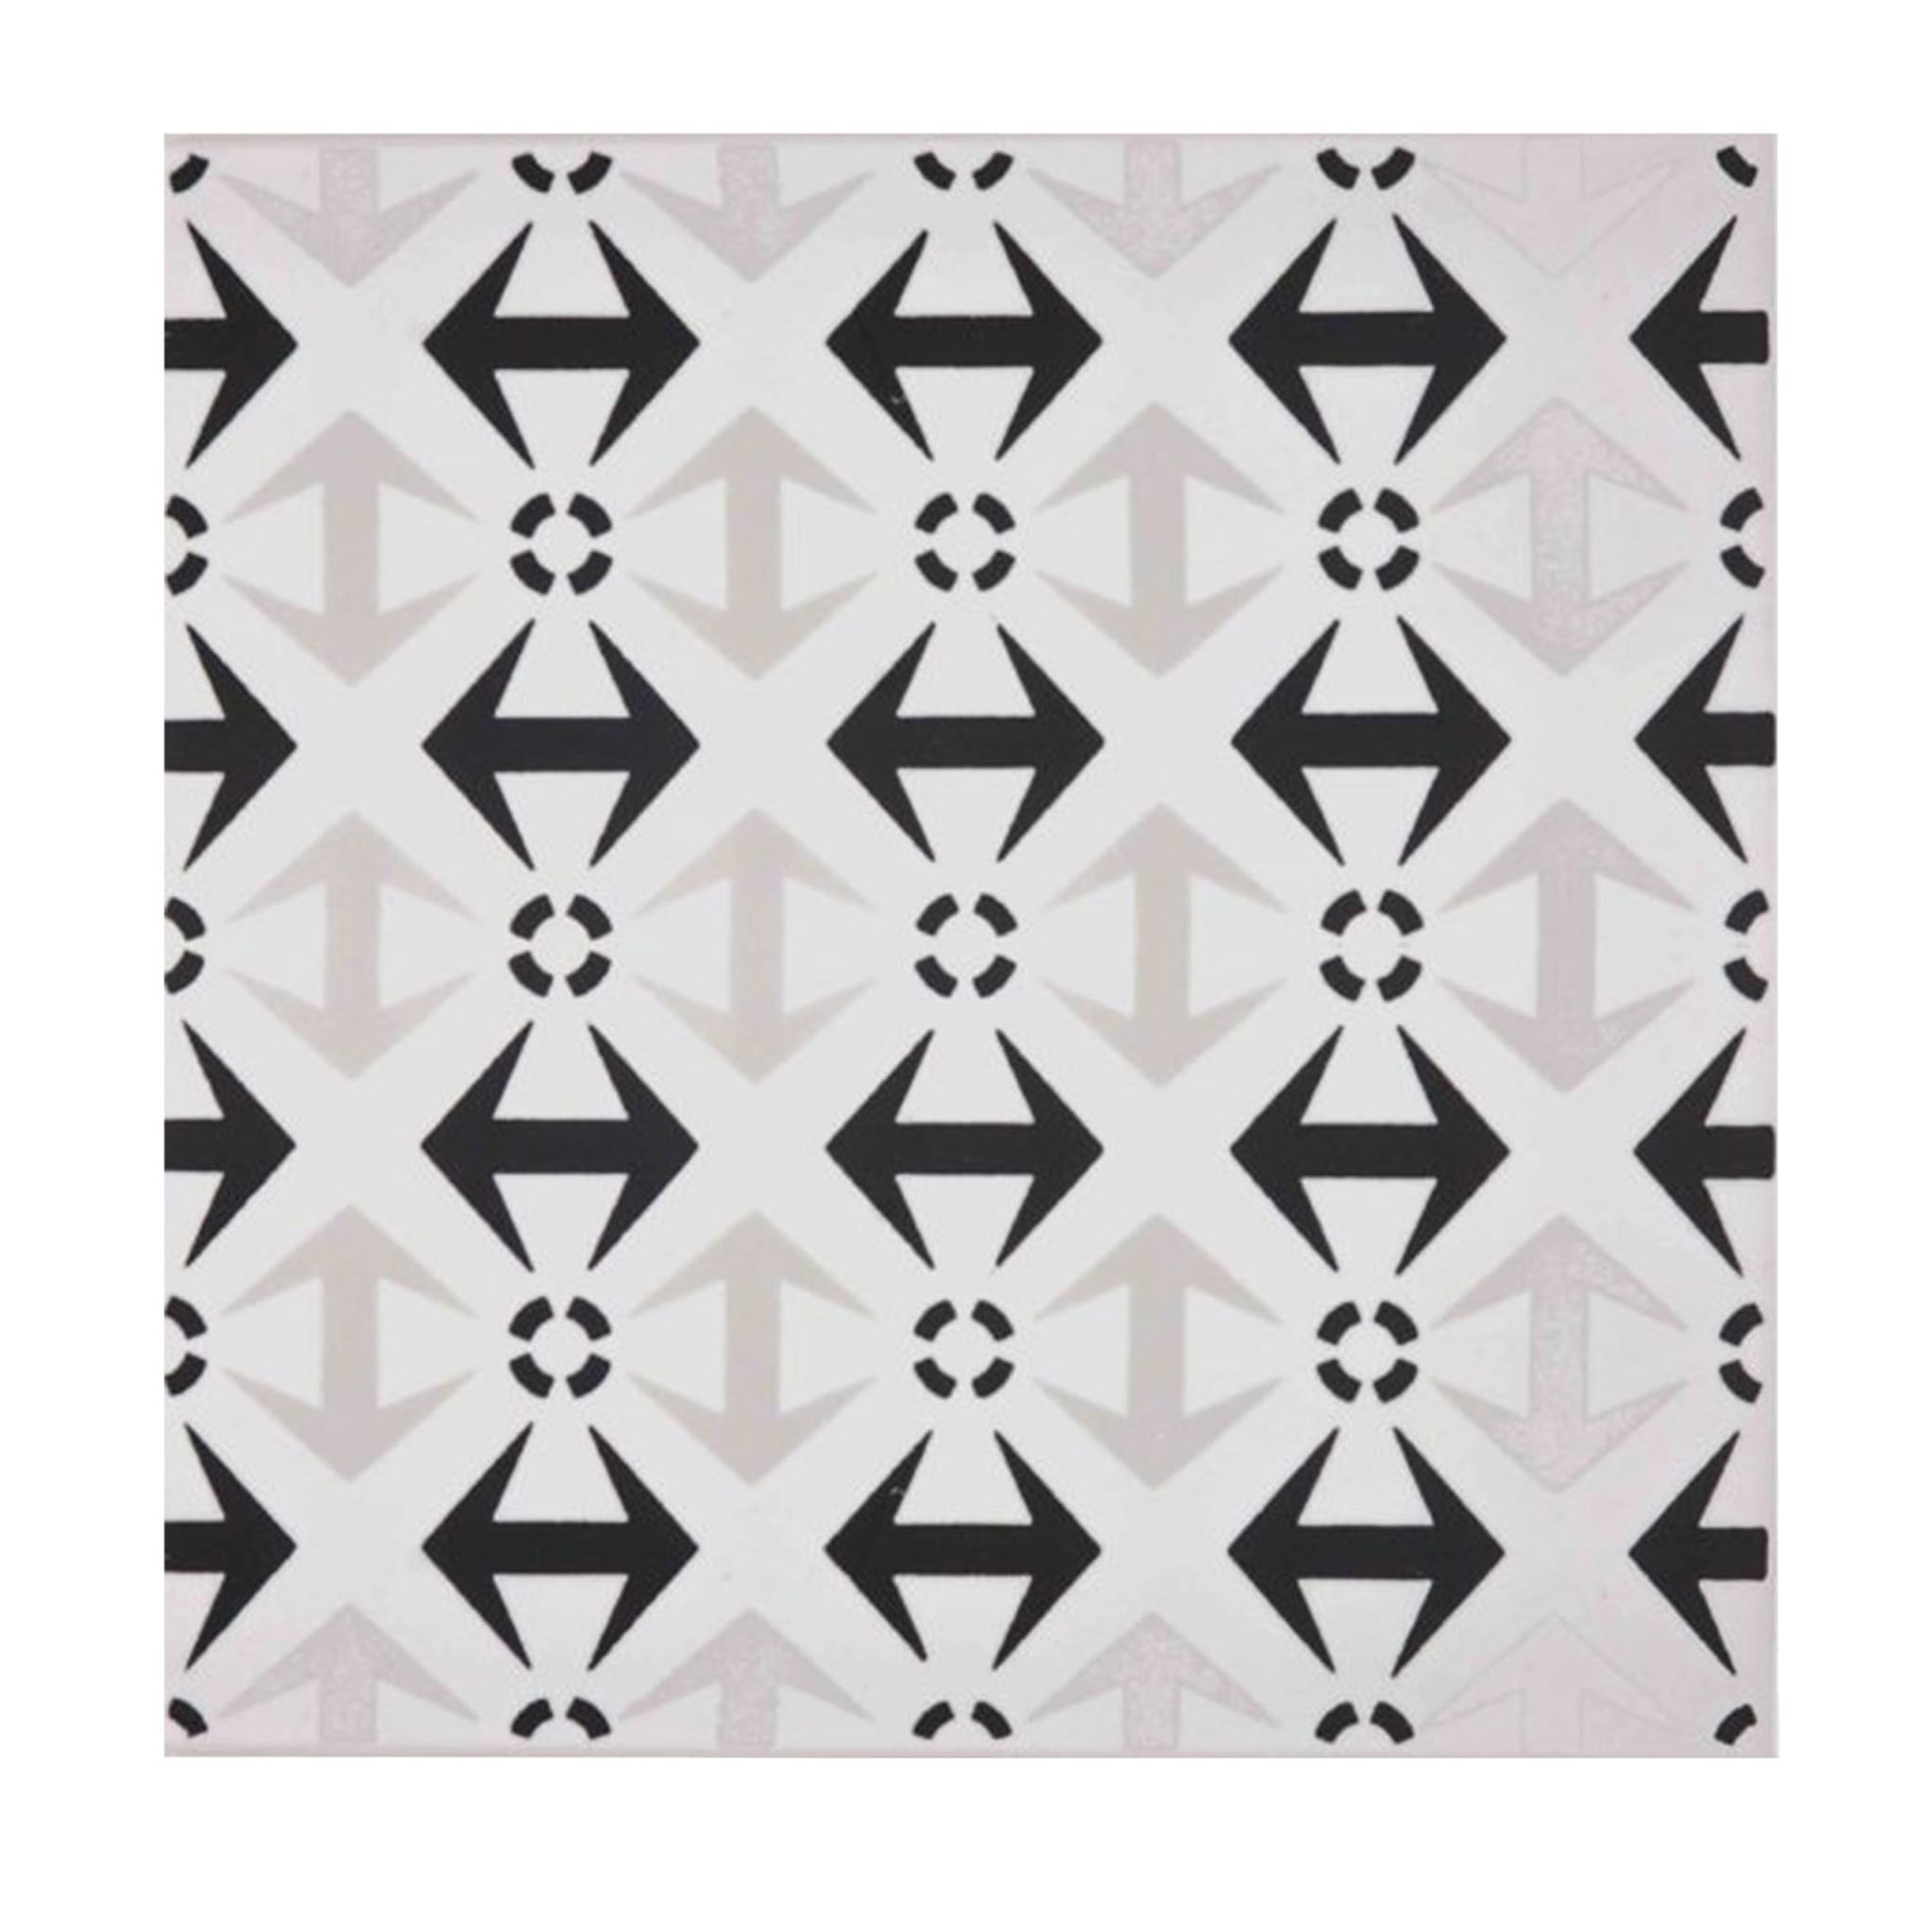 Set of 25 Geometric Trend C44 T6 Tiles - Main view